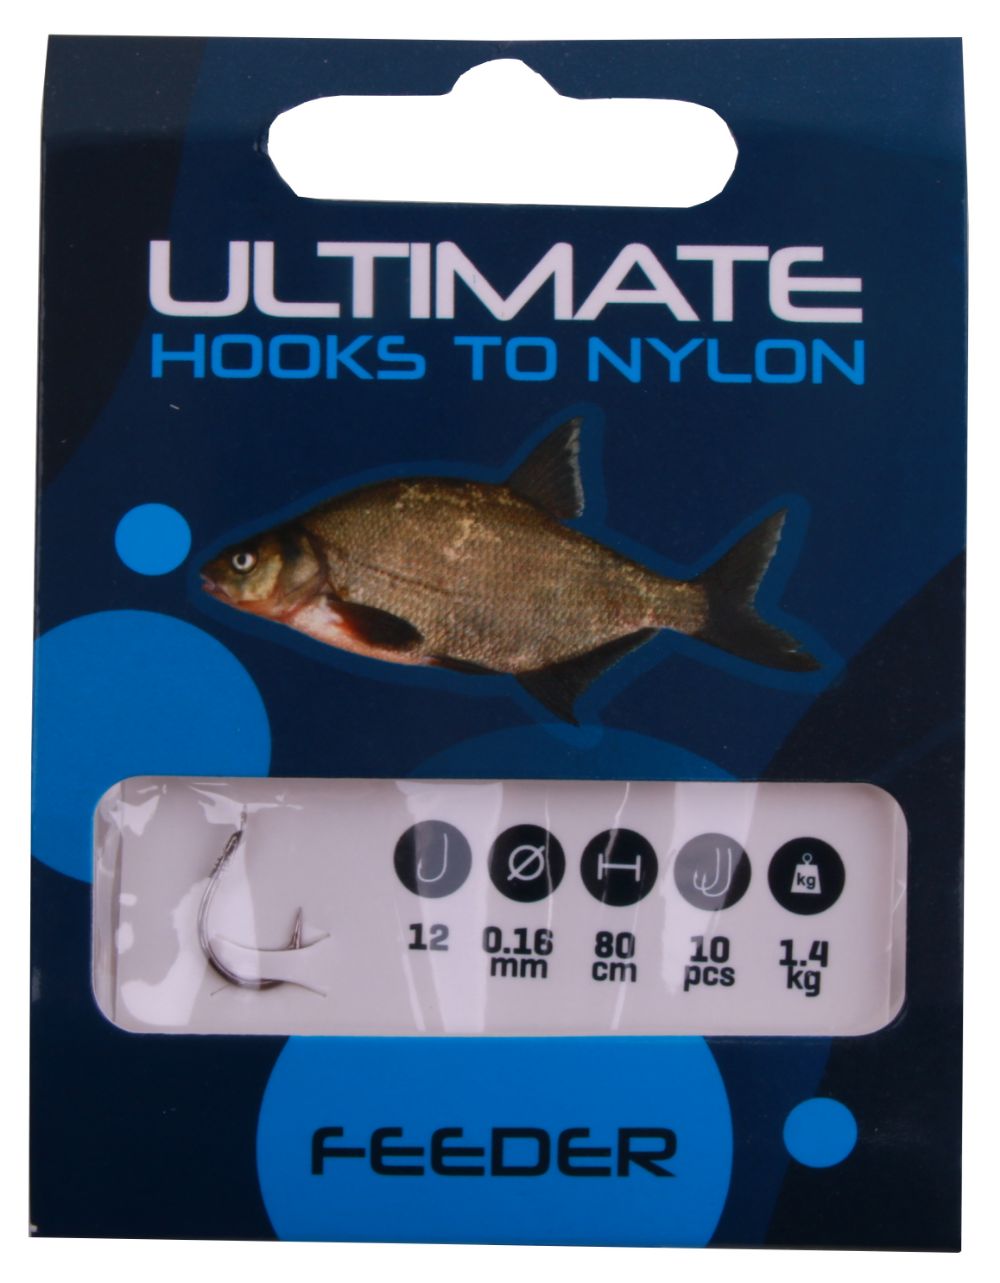 Ultimate hooks to nylon feeder taglia 12 0,16mm 80cm 10pcs